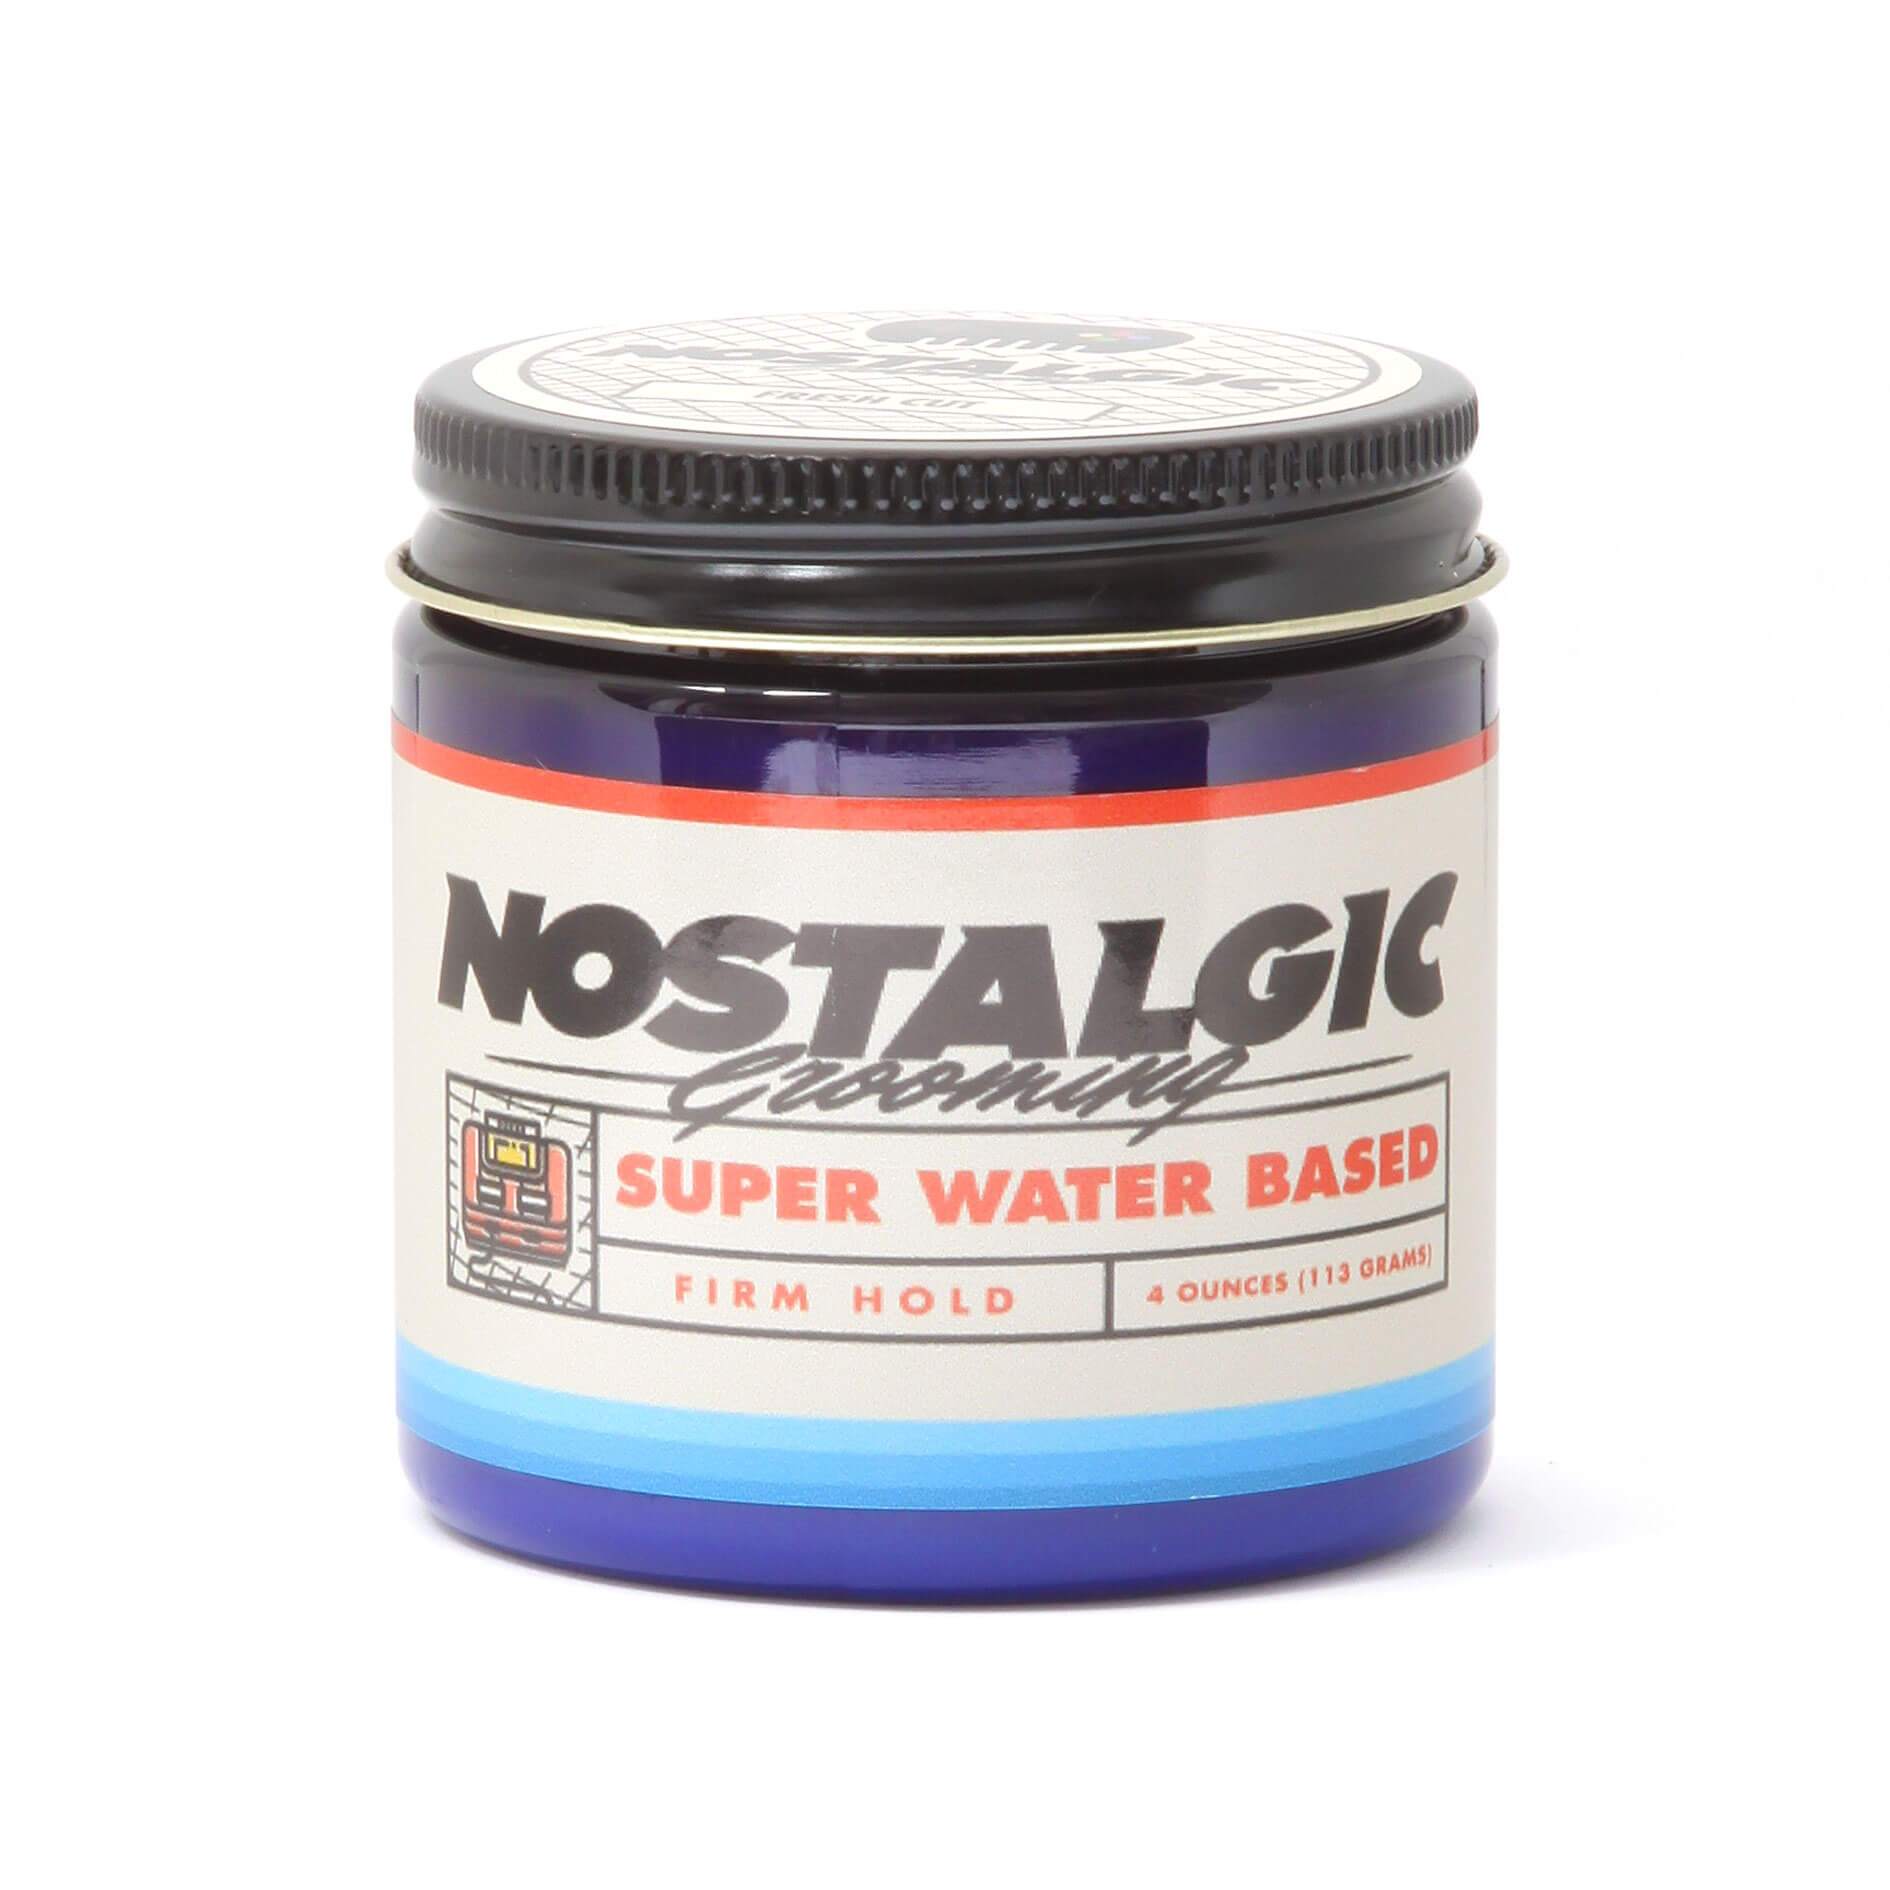 Nostalgic Grooming Super Water Based Pomade